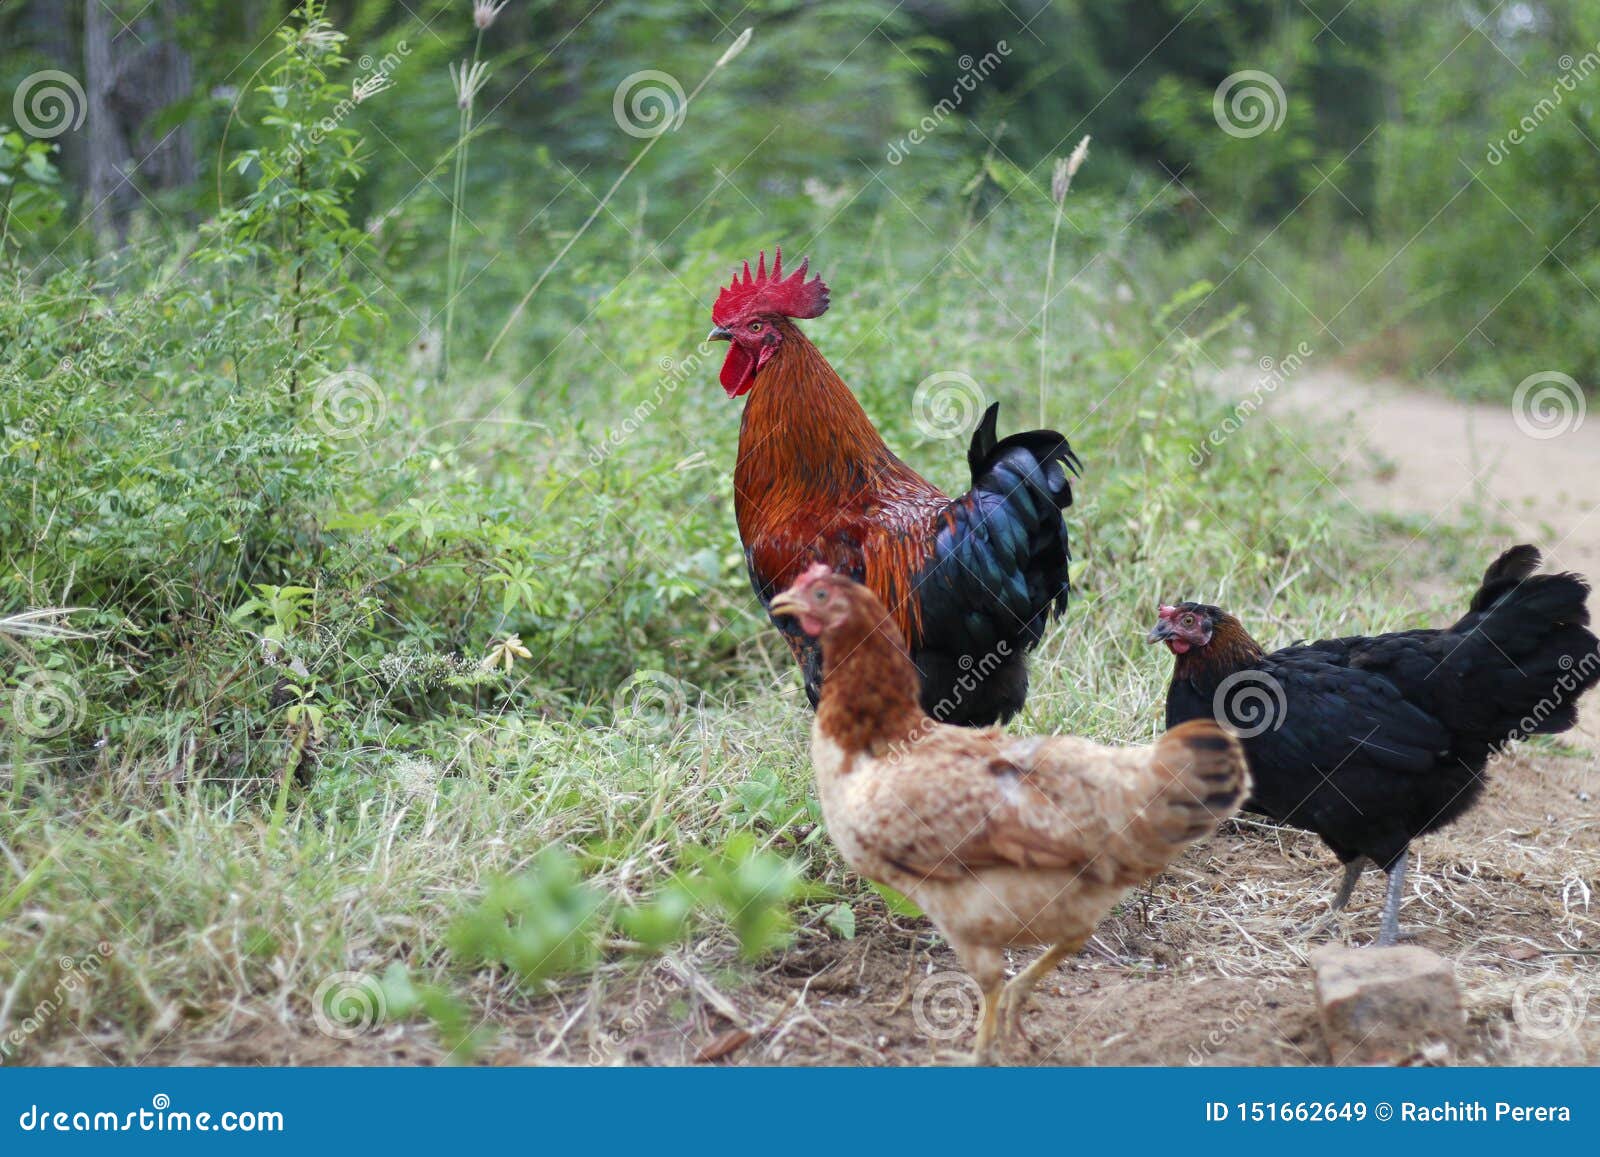 Free Range Poultry Farming in Sri Lanka Stock Image - Image of organic,  birds: 151662649